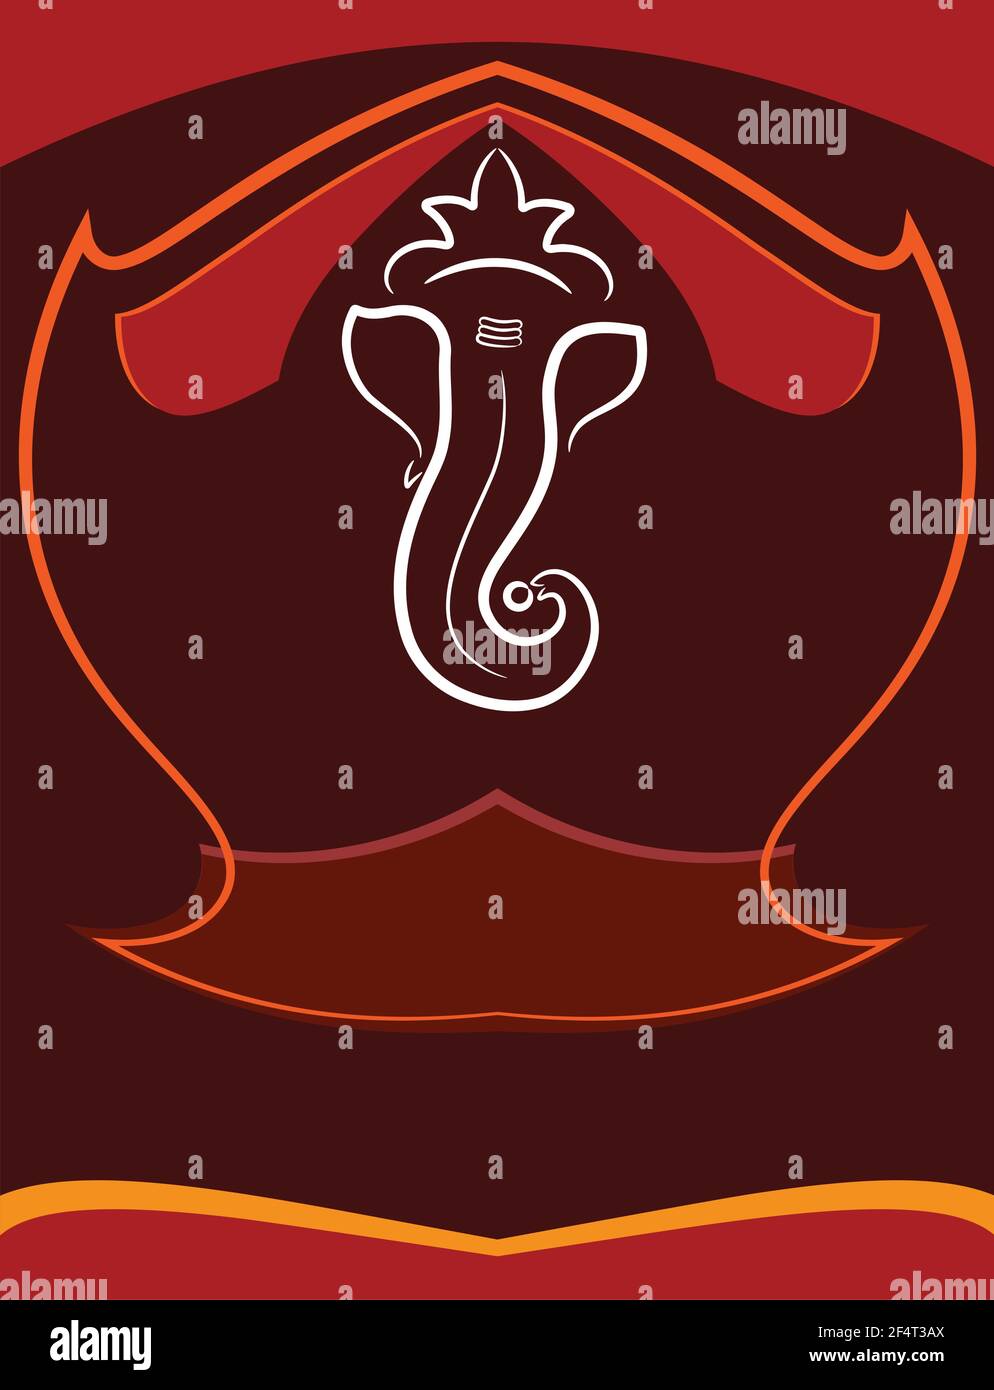 Ganesha The Lord Of Wisdom Design Vector Art Illustration Stock Vector ...